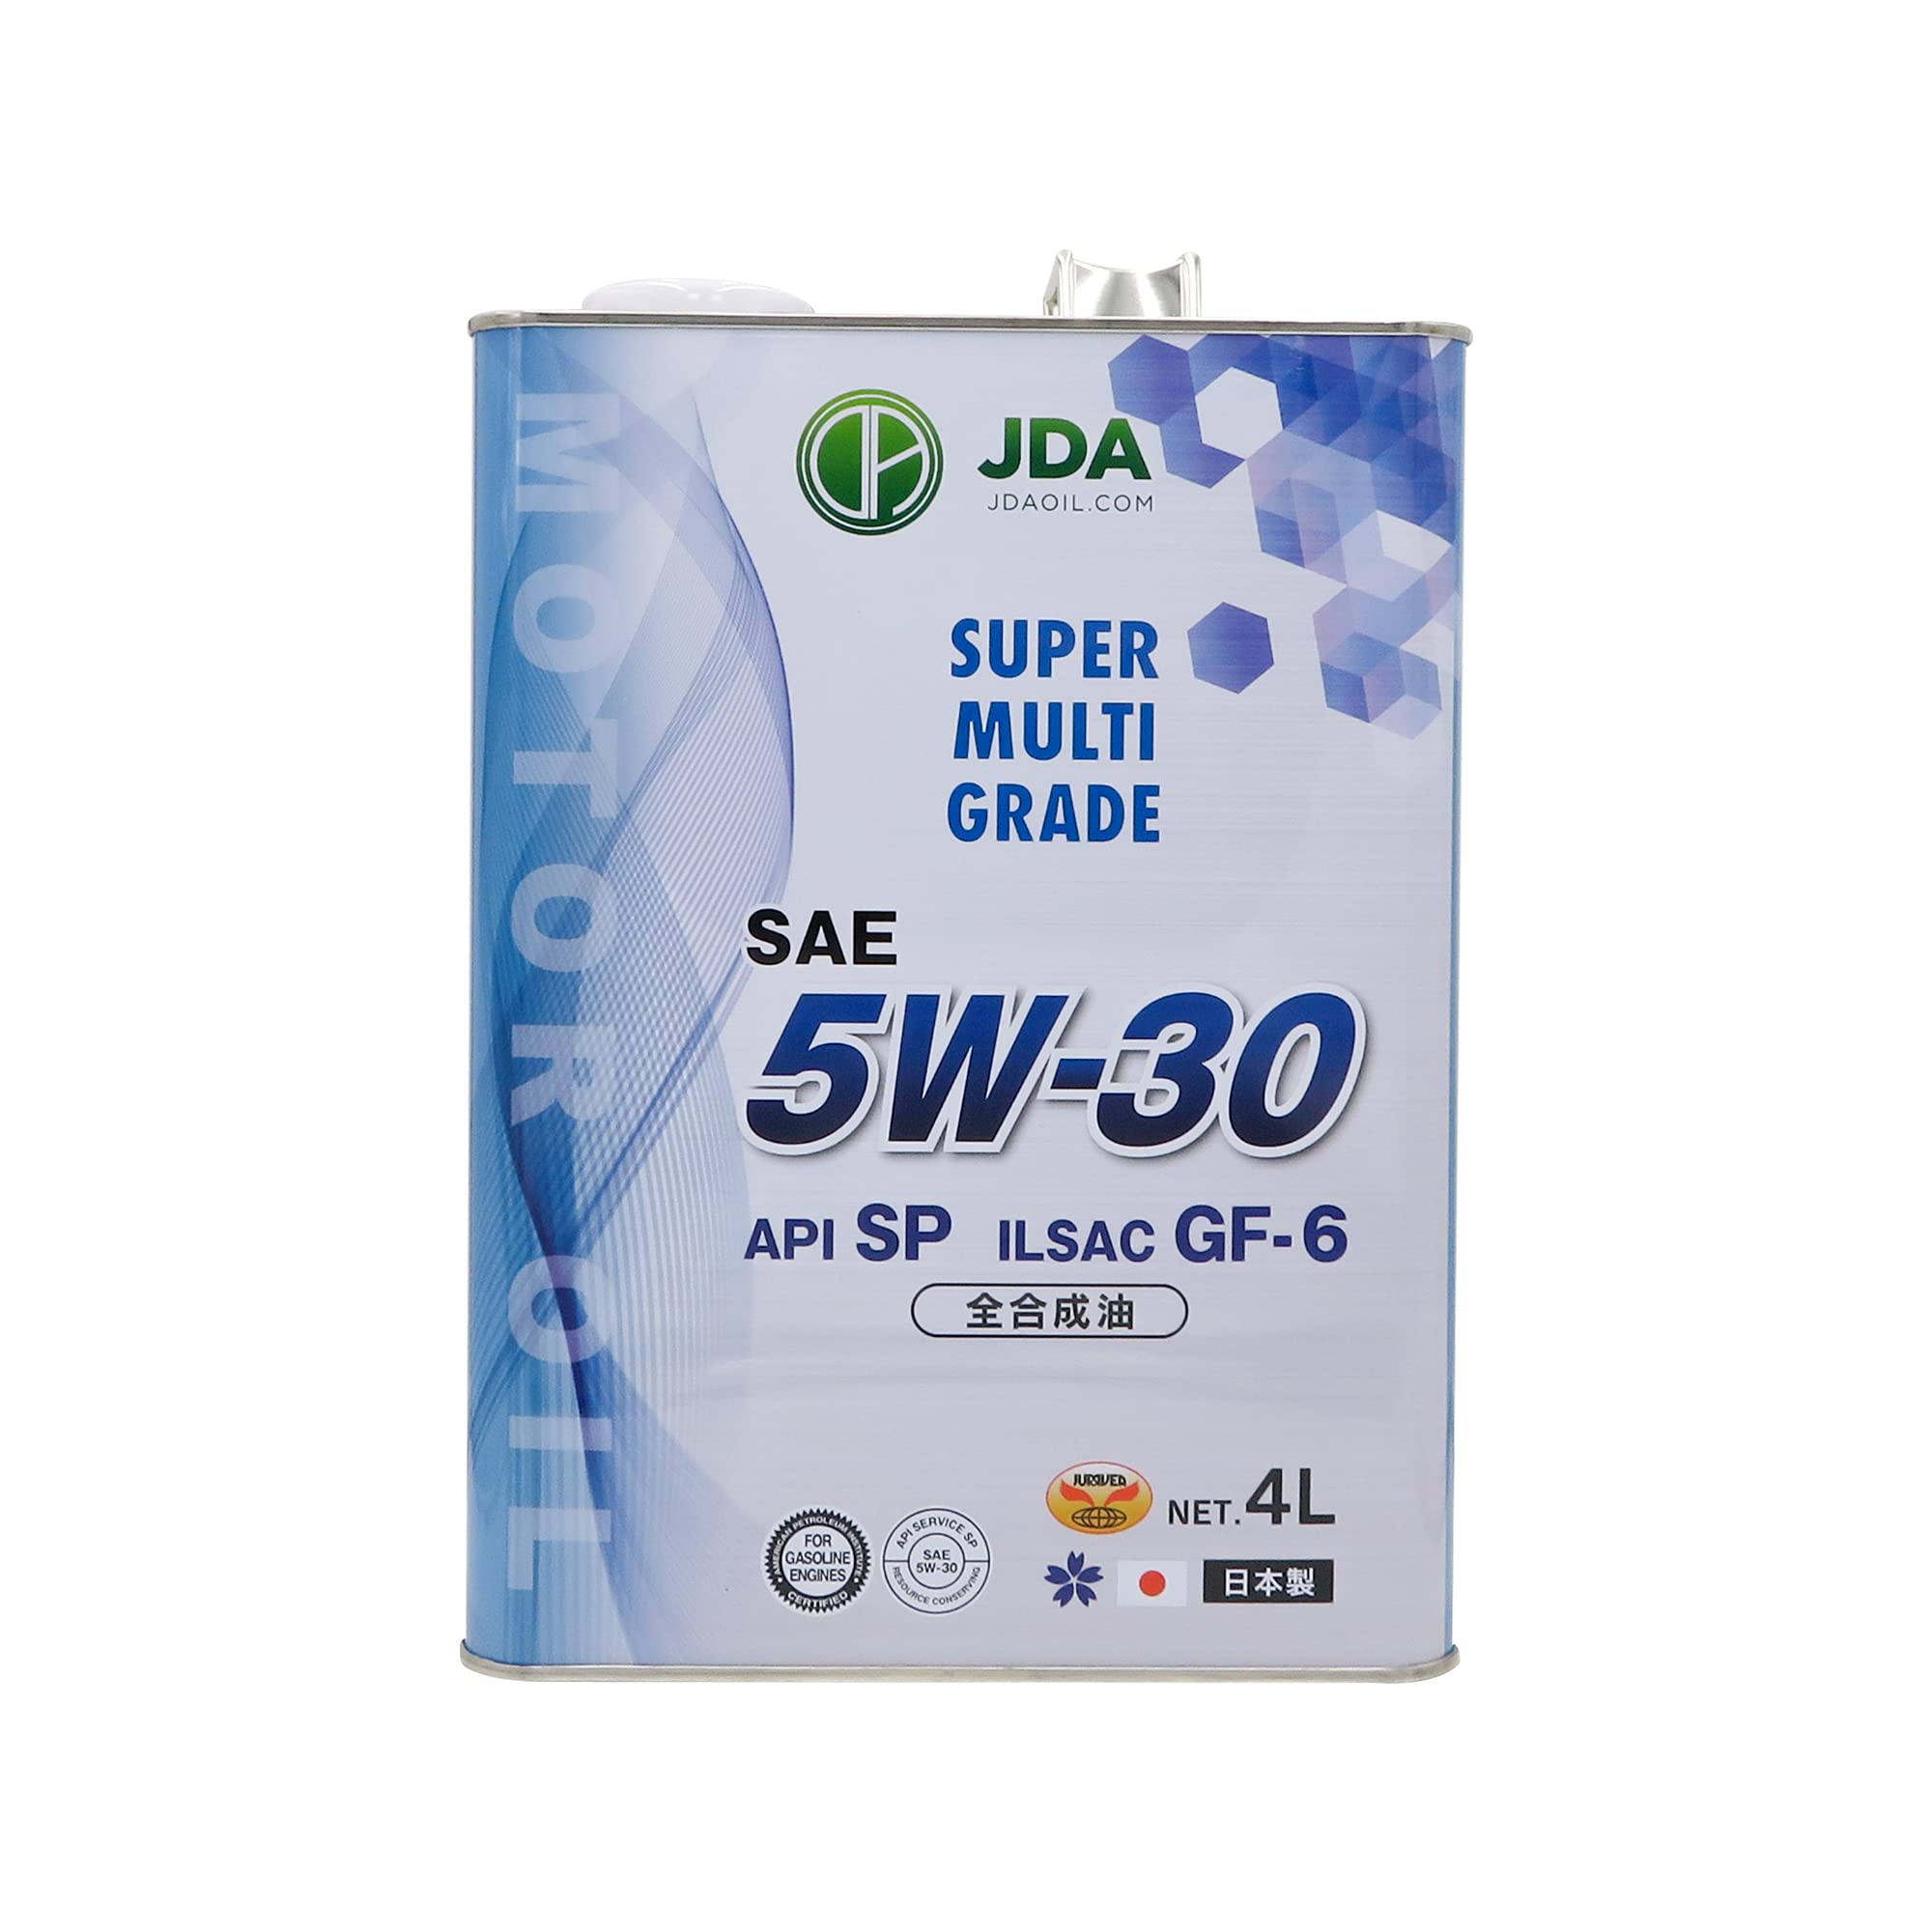 JDA エンジンオイル スーパーマルチグレードエンジンオイル 5W-30 SP/GF-6 4L 全合成基油 (4L)